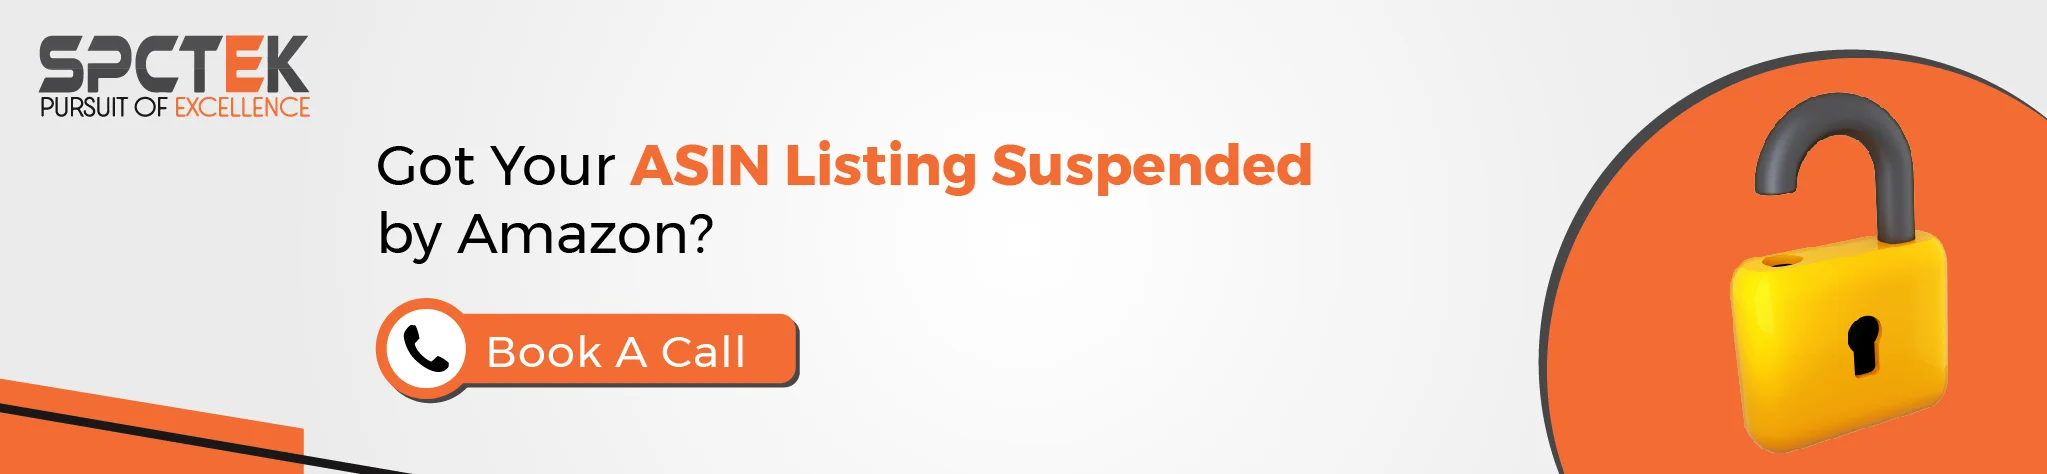 Amazon listing suspended CTA